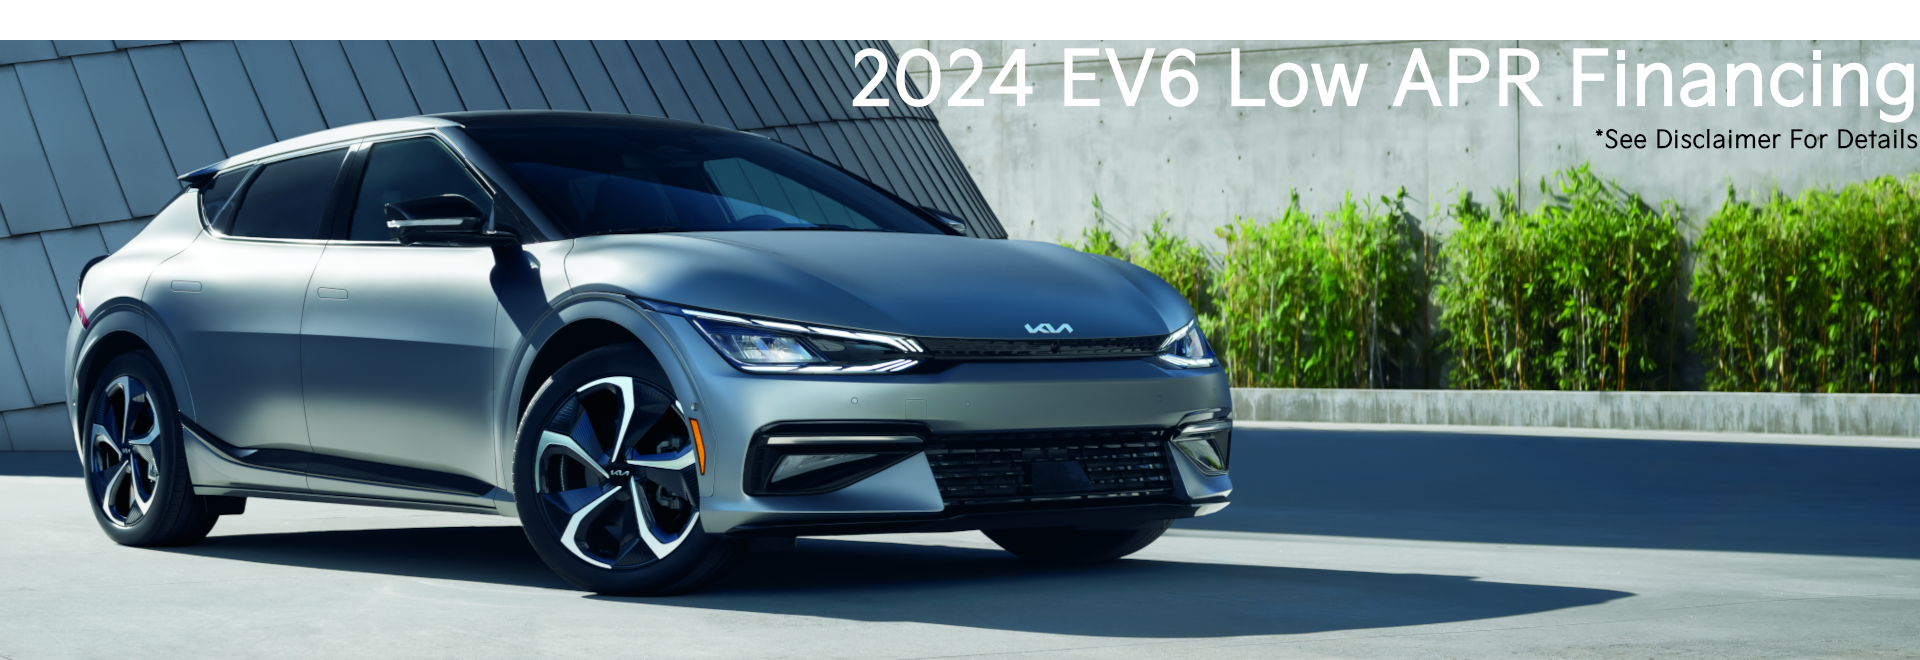 2024 EV6 Low APR Offer